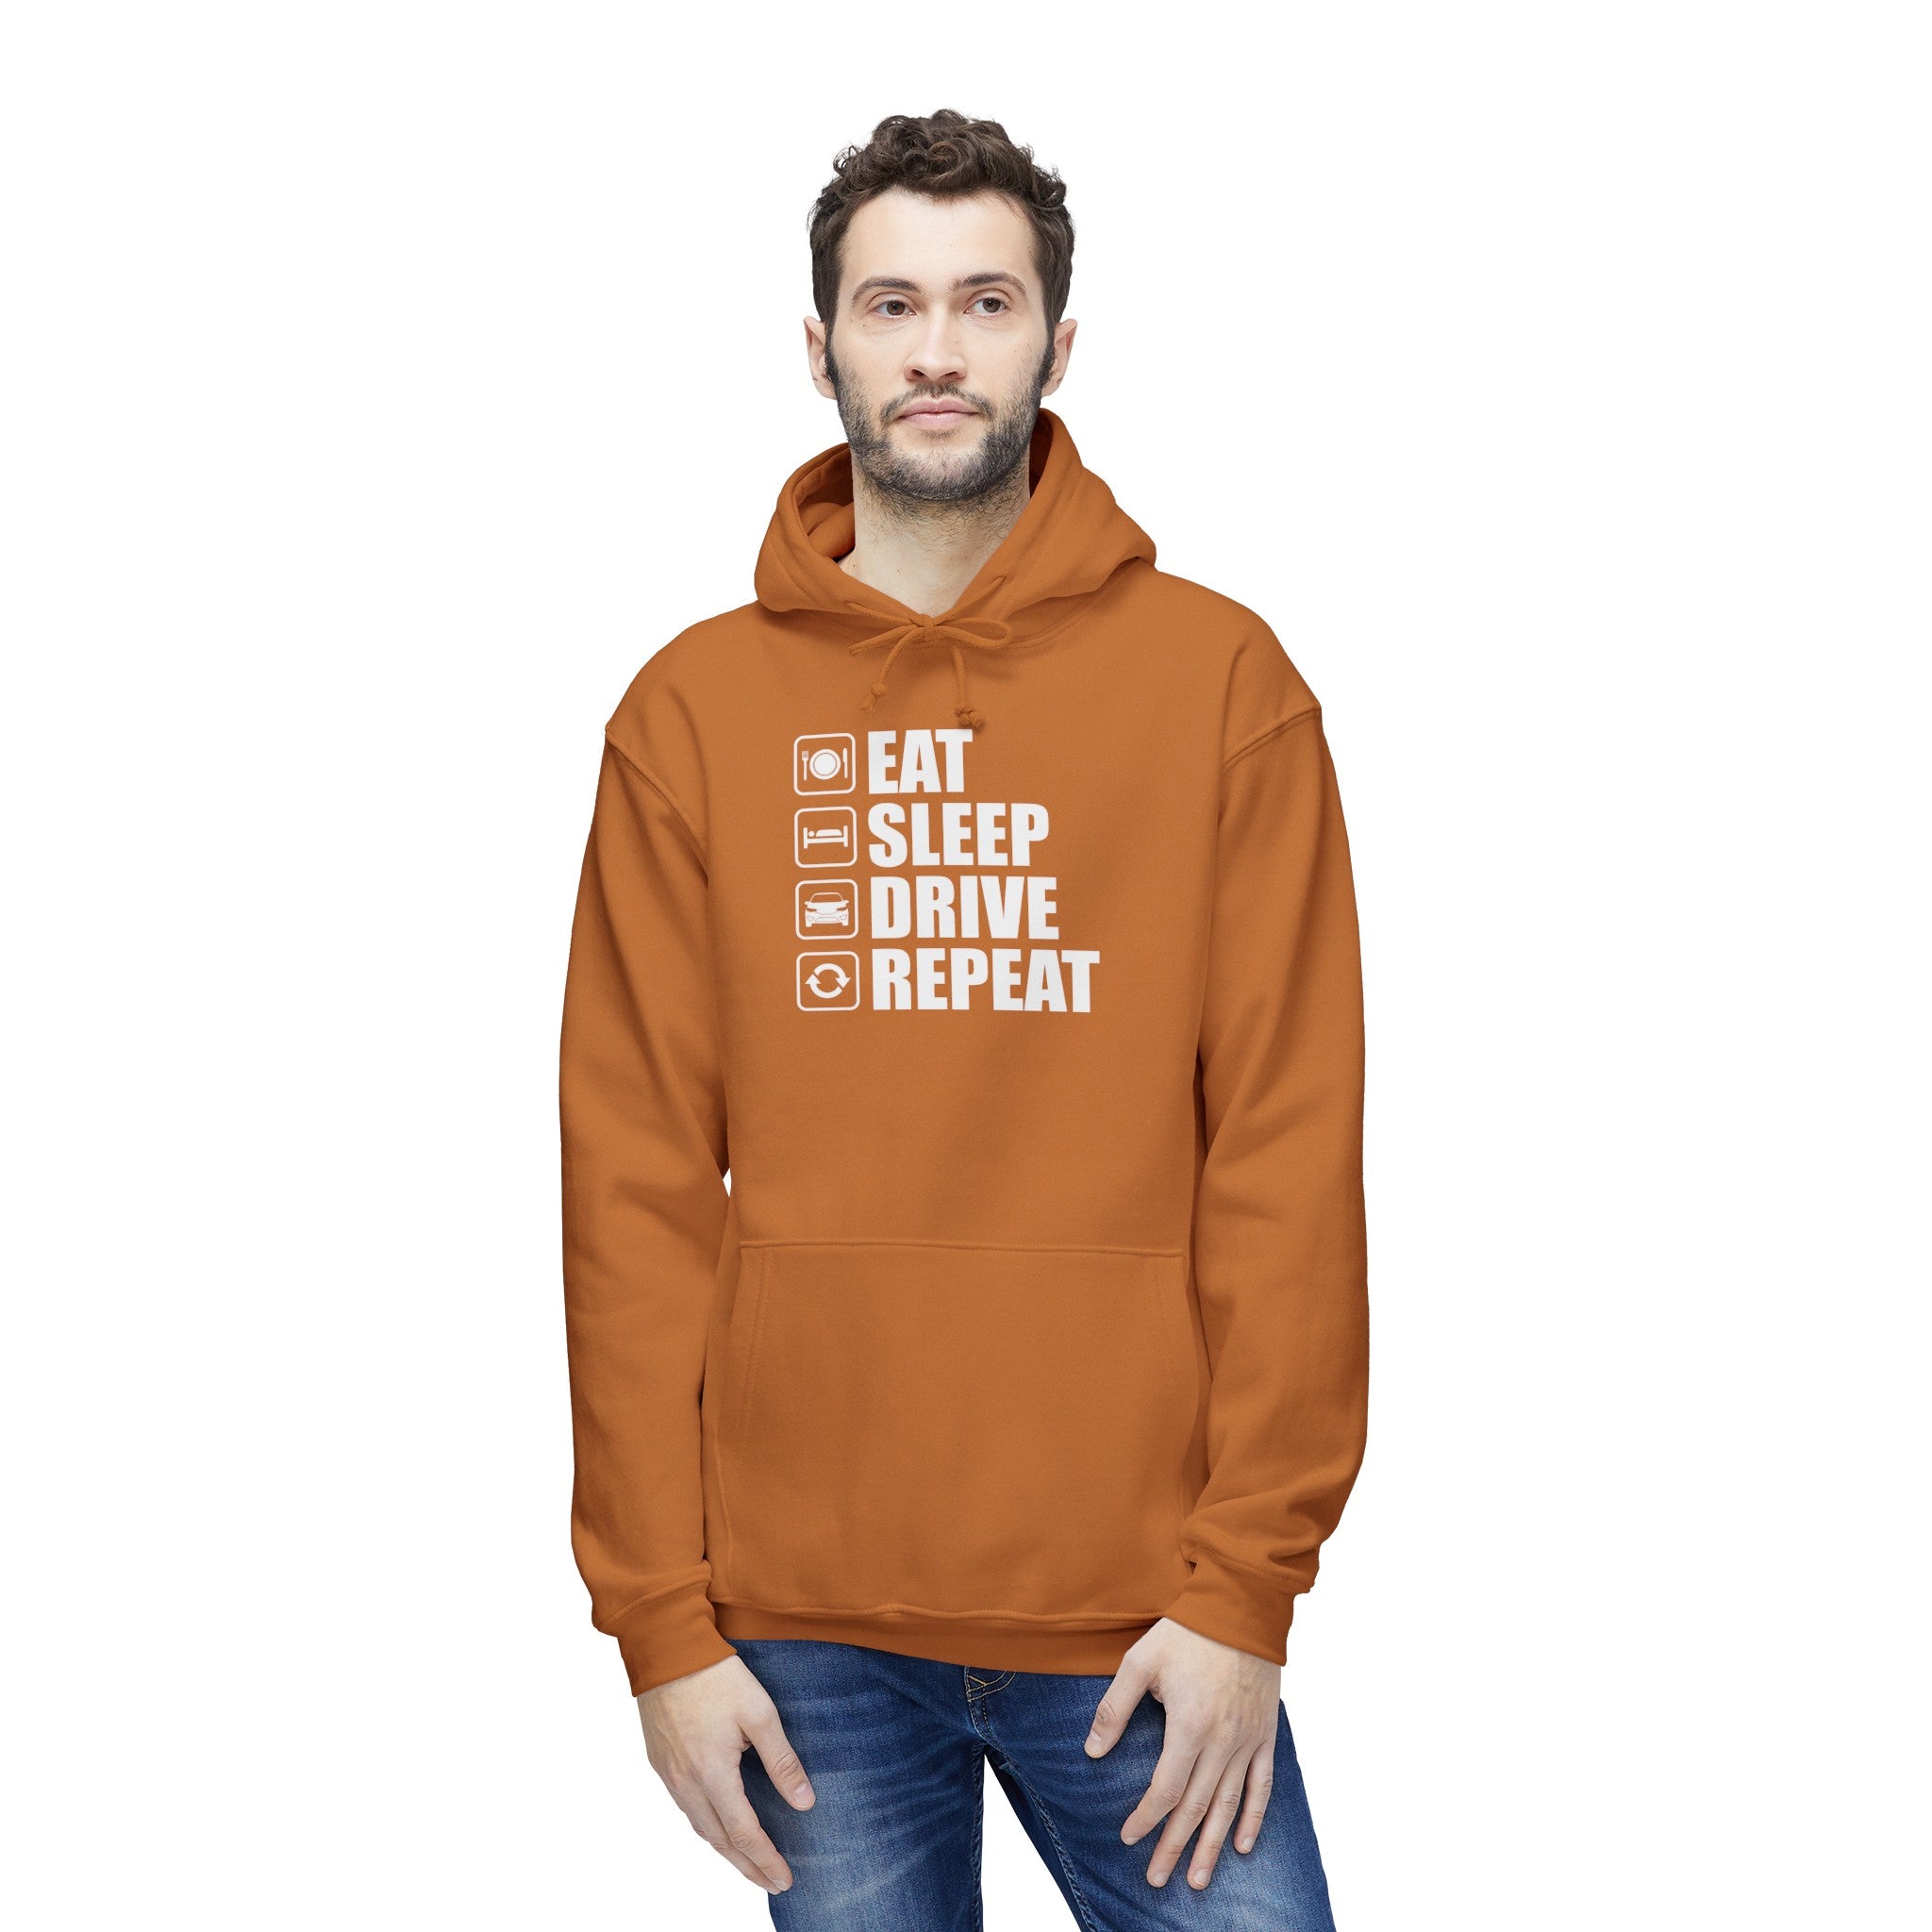 East/Sleep/Drive/Repeat Unisex Hooded Sweatshirt